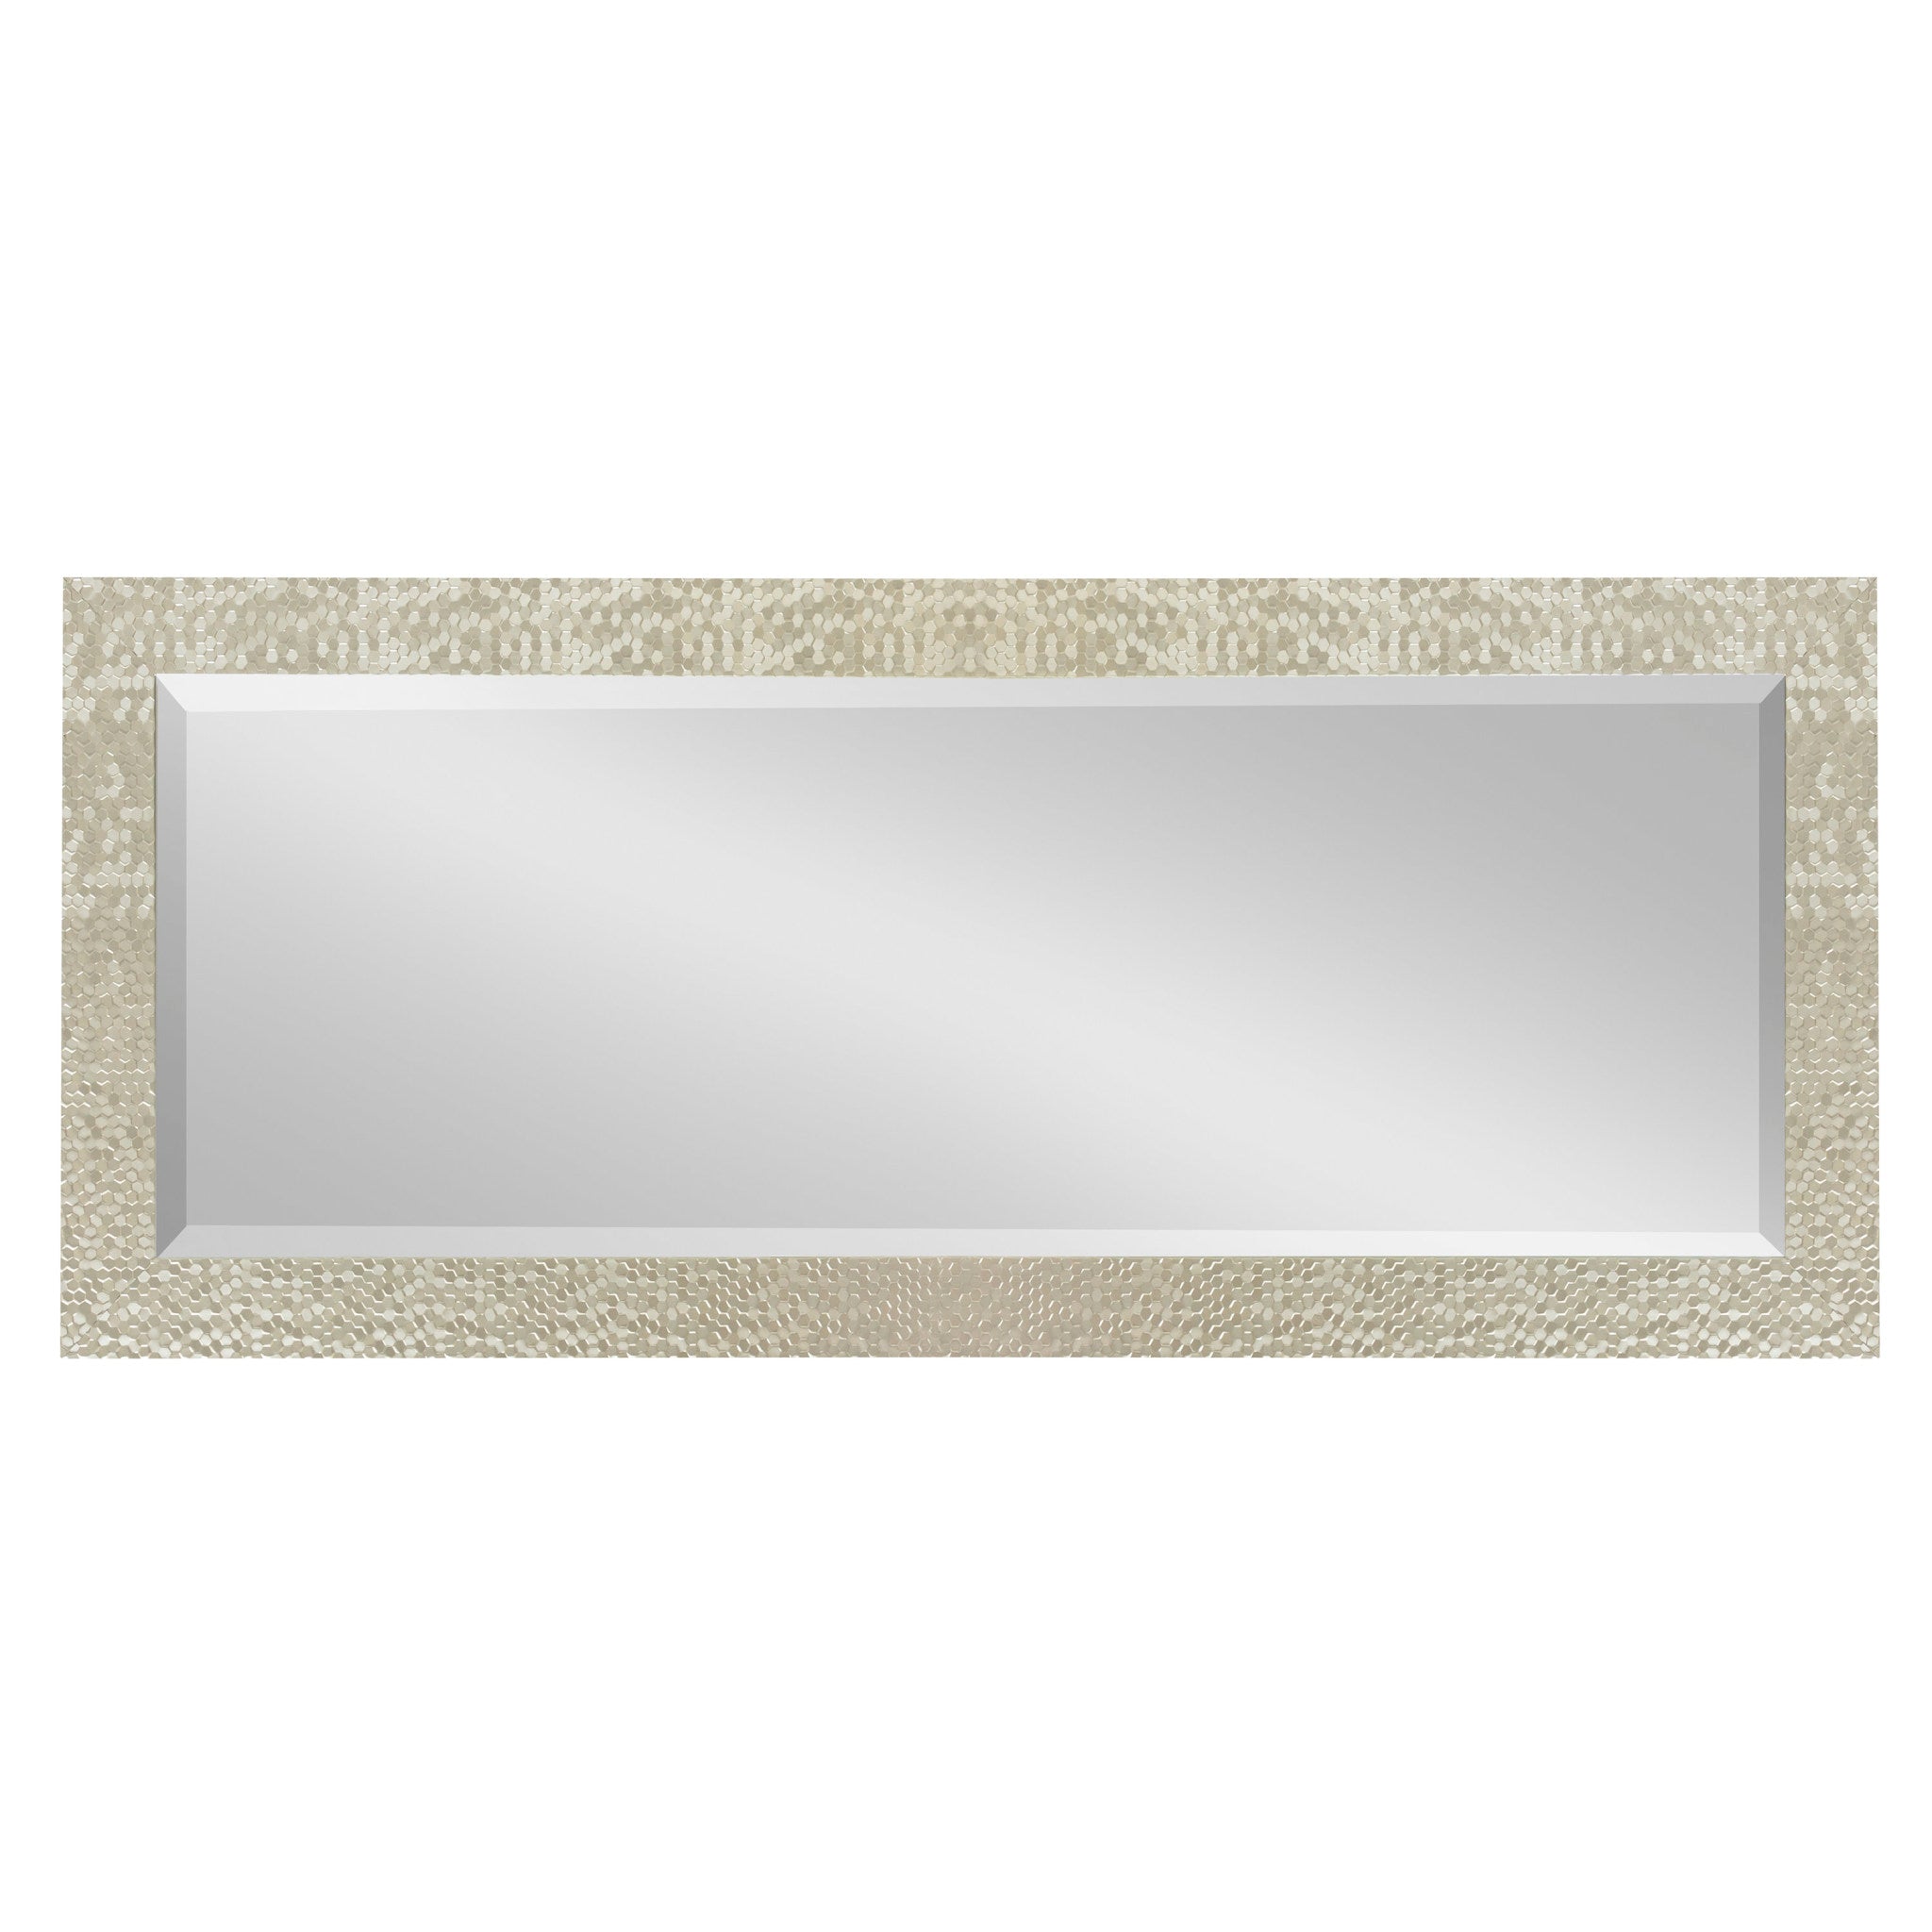 Coolidge Framed Beveled Wall Mirror